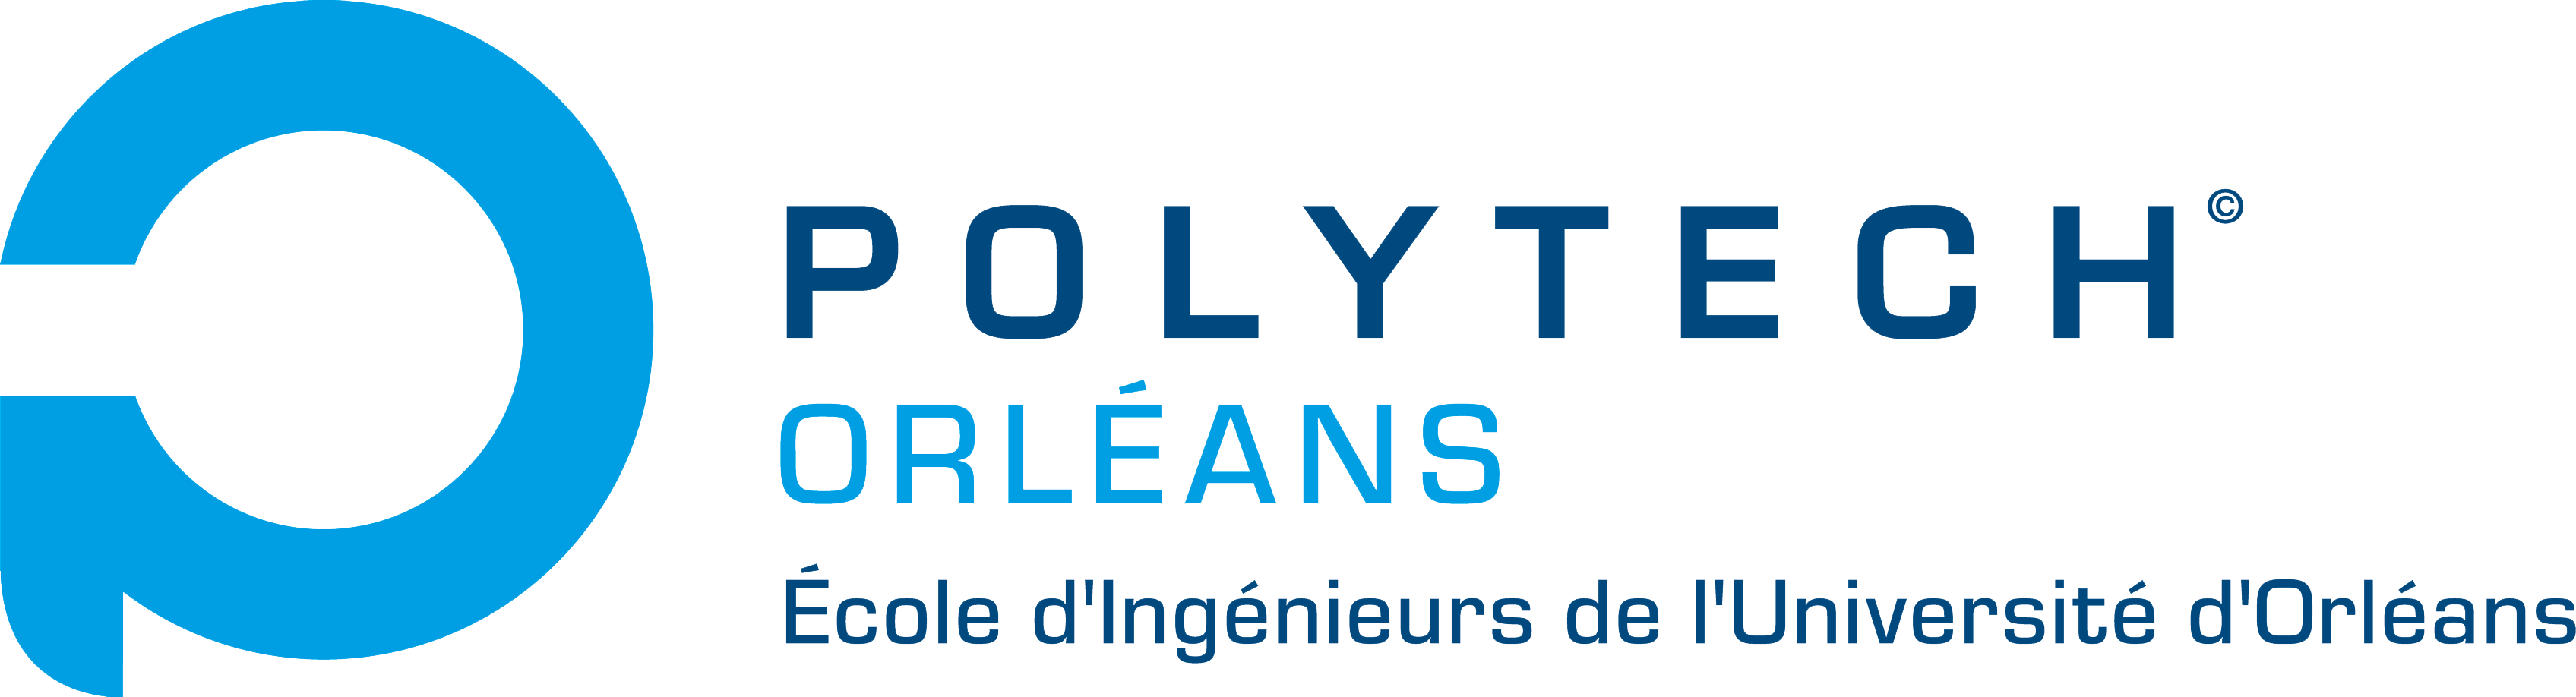 Polytech Orleans logo